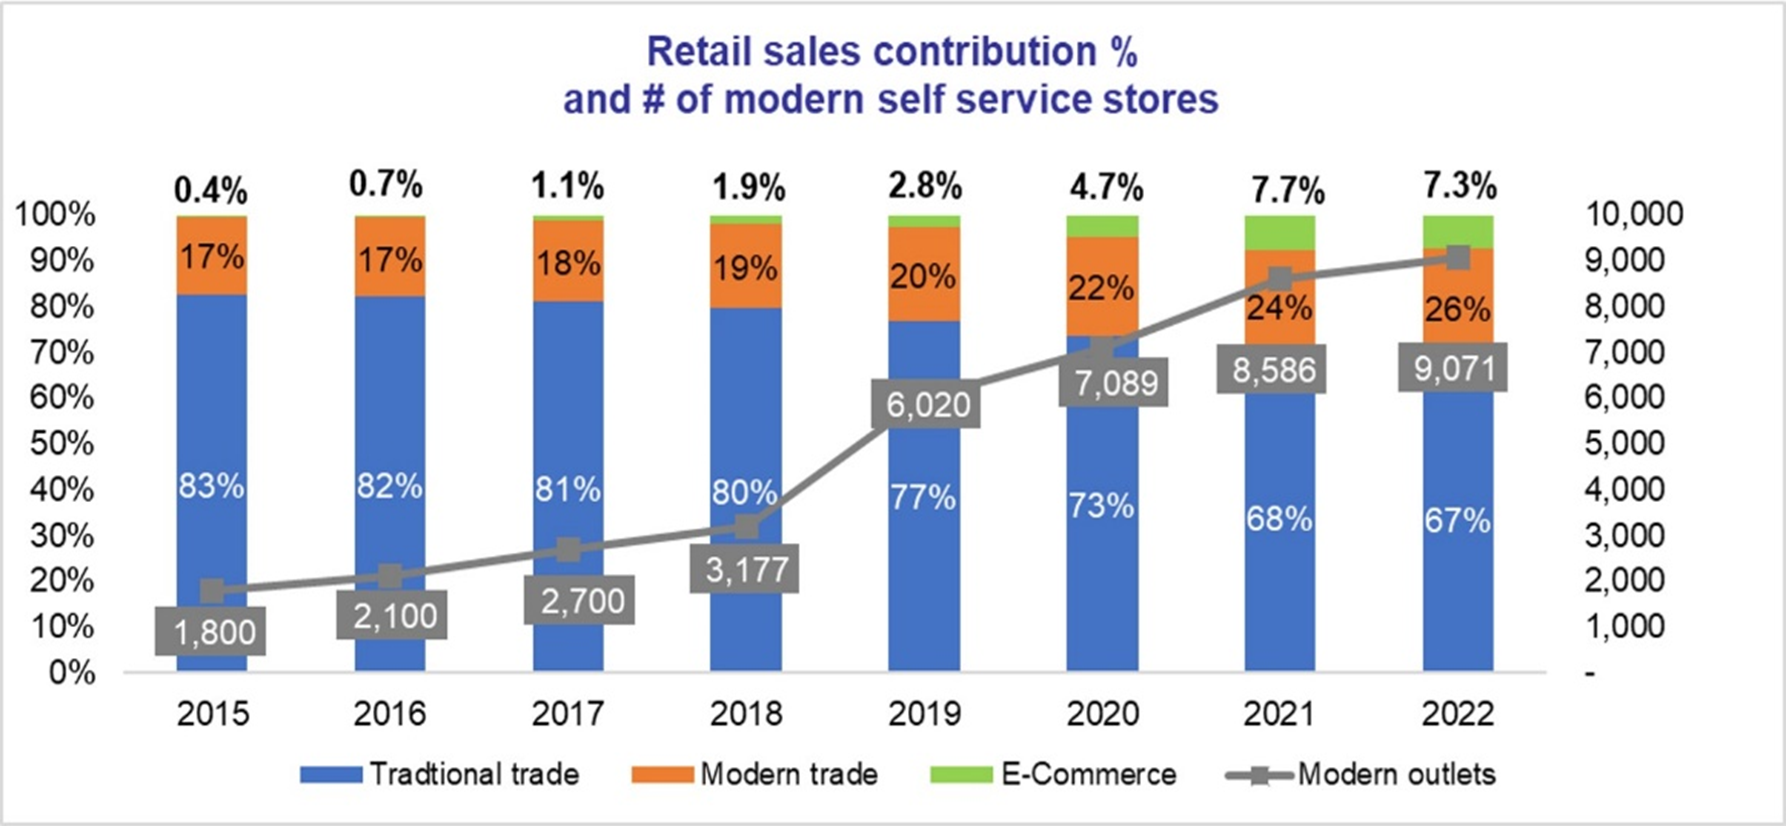 Retail sales contribution in Vietnam